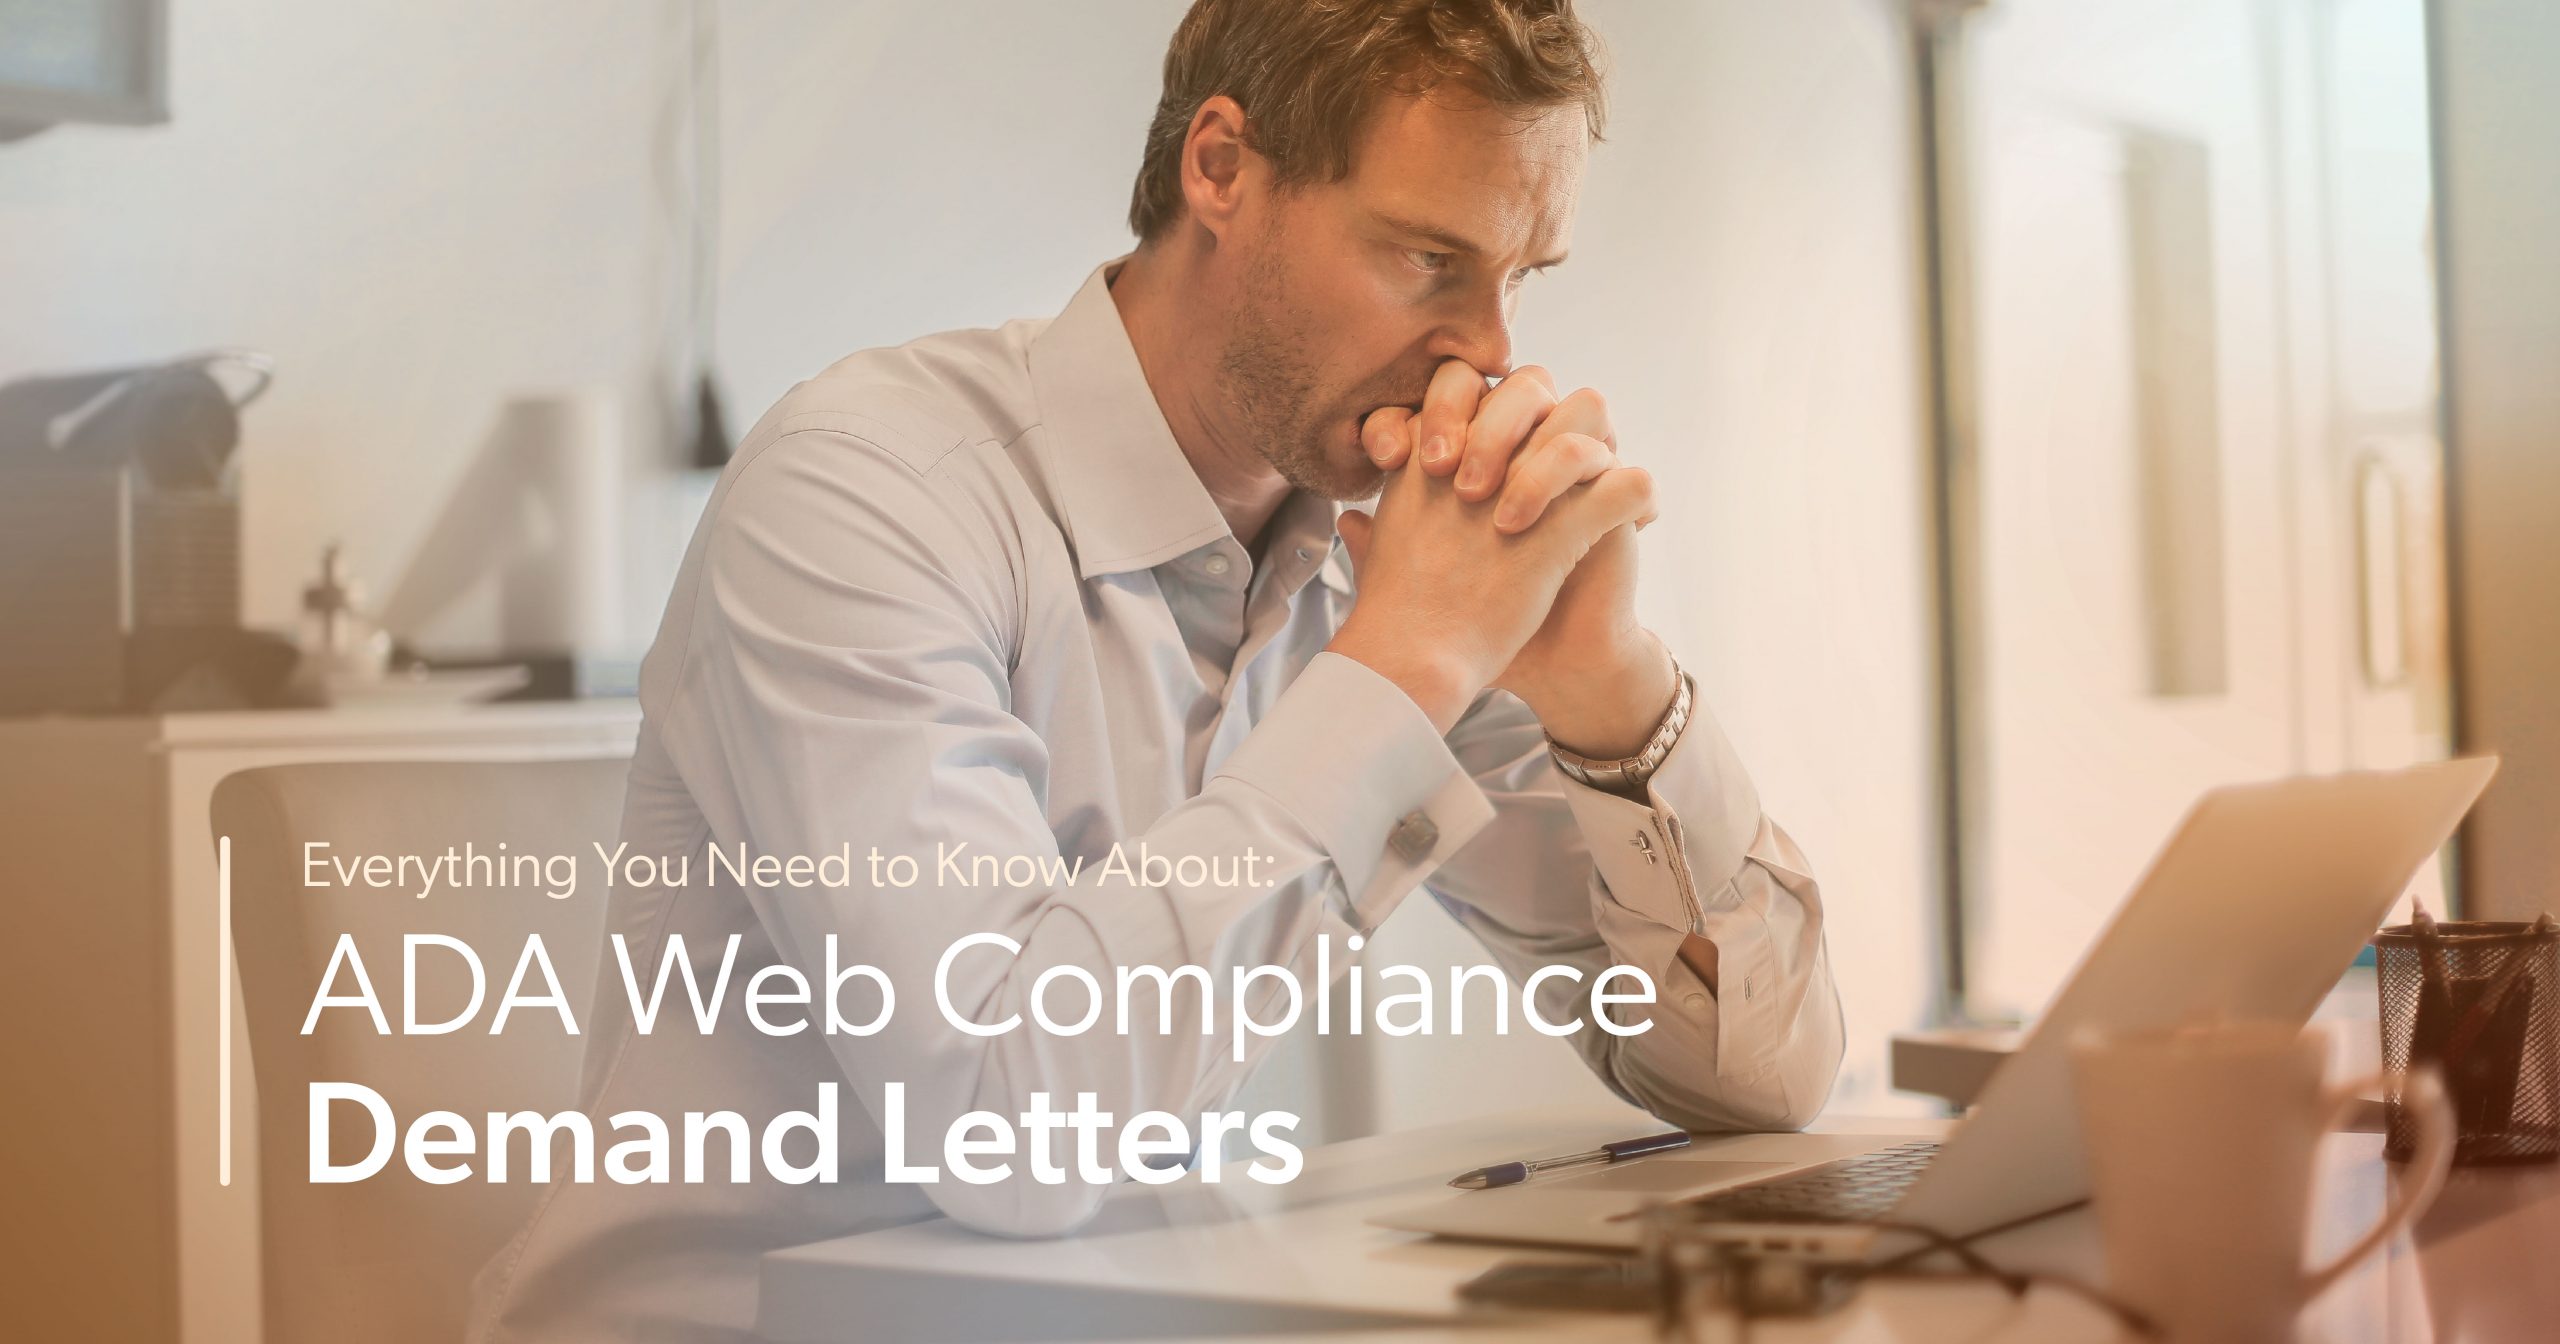 ADA Web Compliance Demand Letters